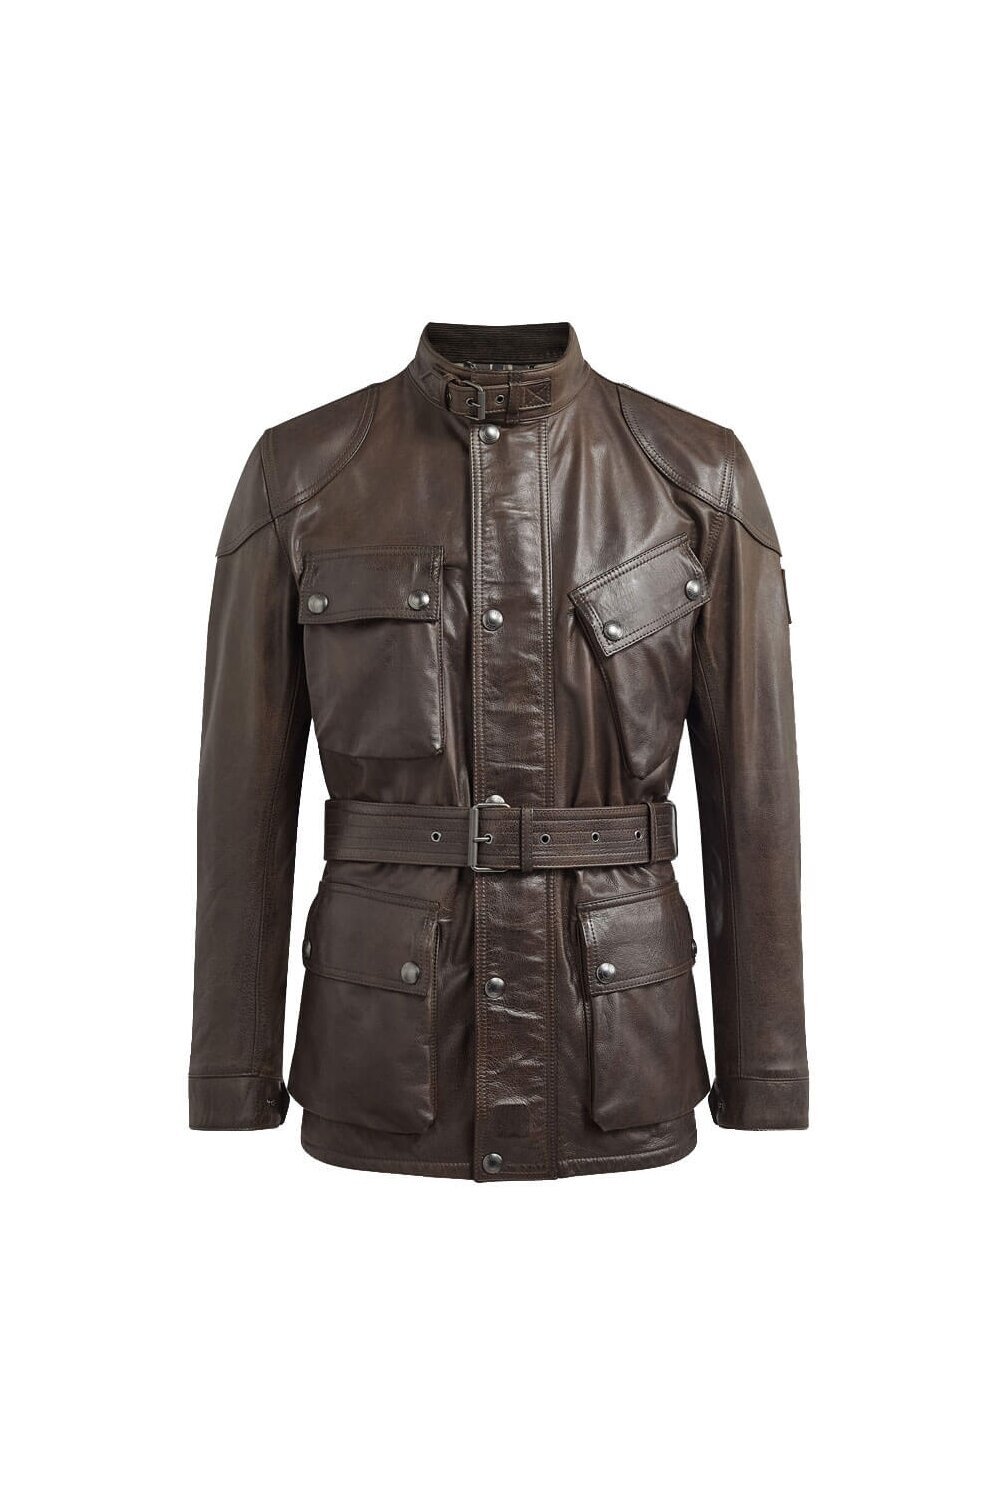 belstaff-trialmaster-panther-leather-jacket-black-brown-p6076-25557_image.jpg